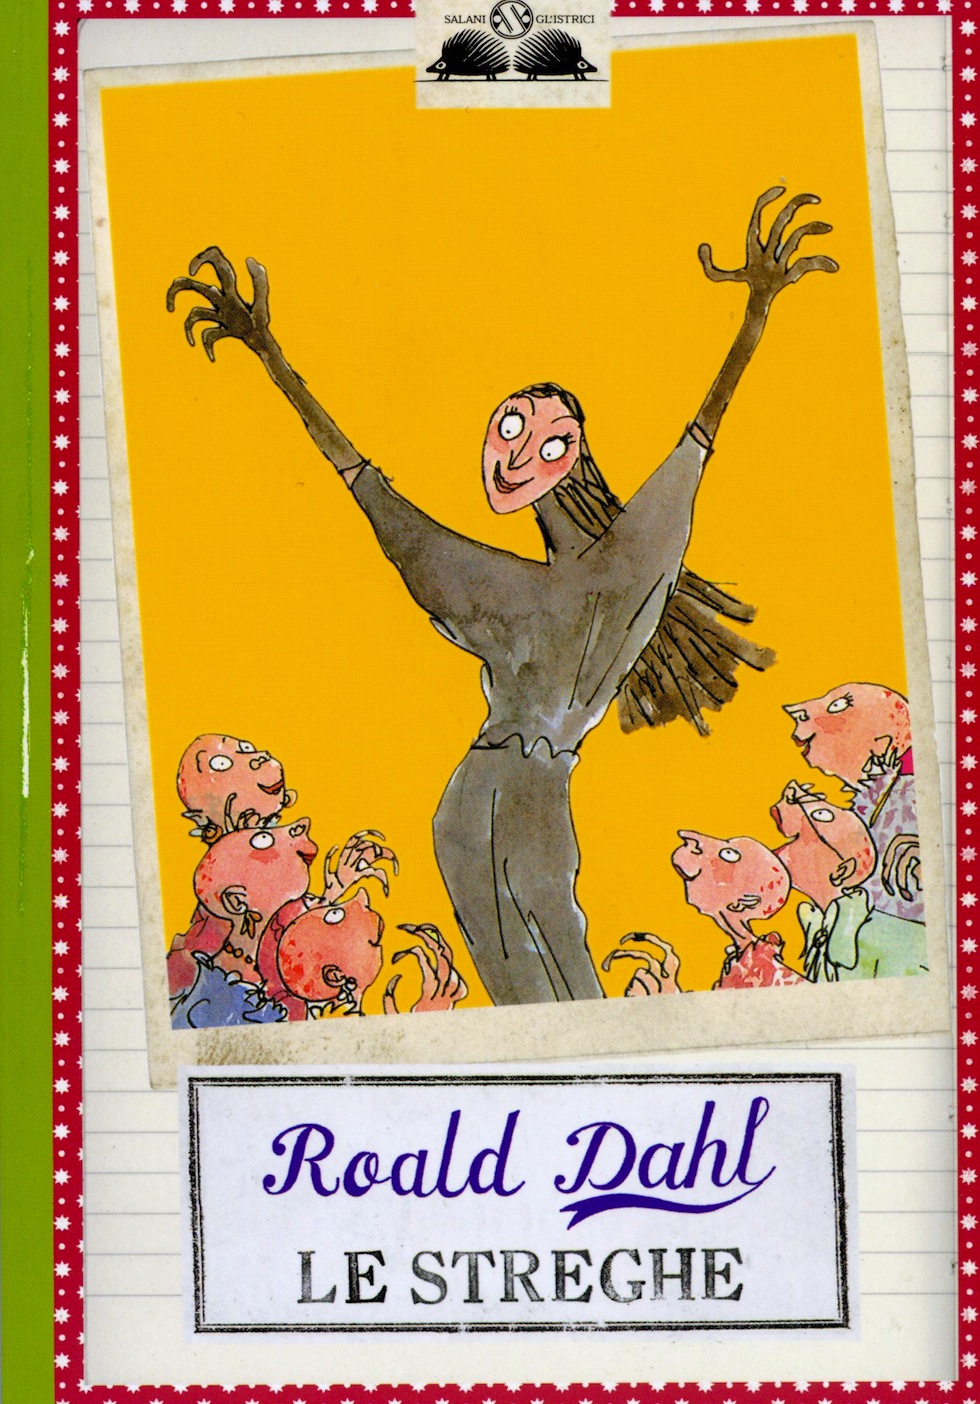 Le streghe Roald Dahl